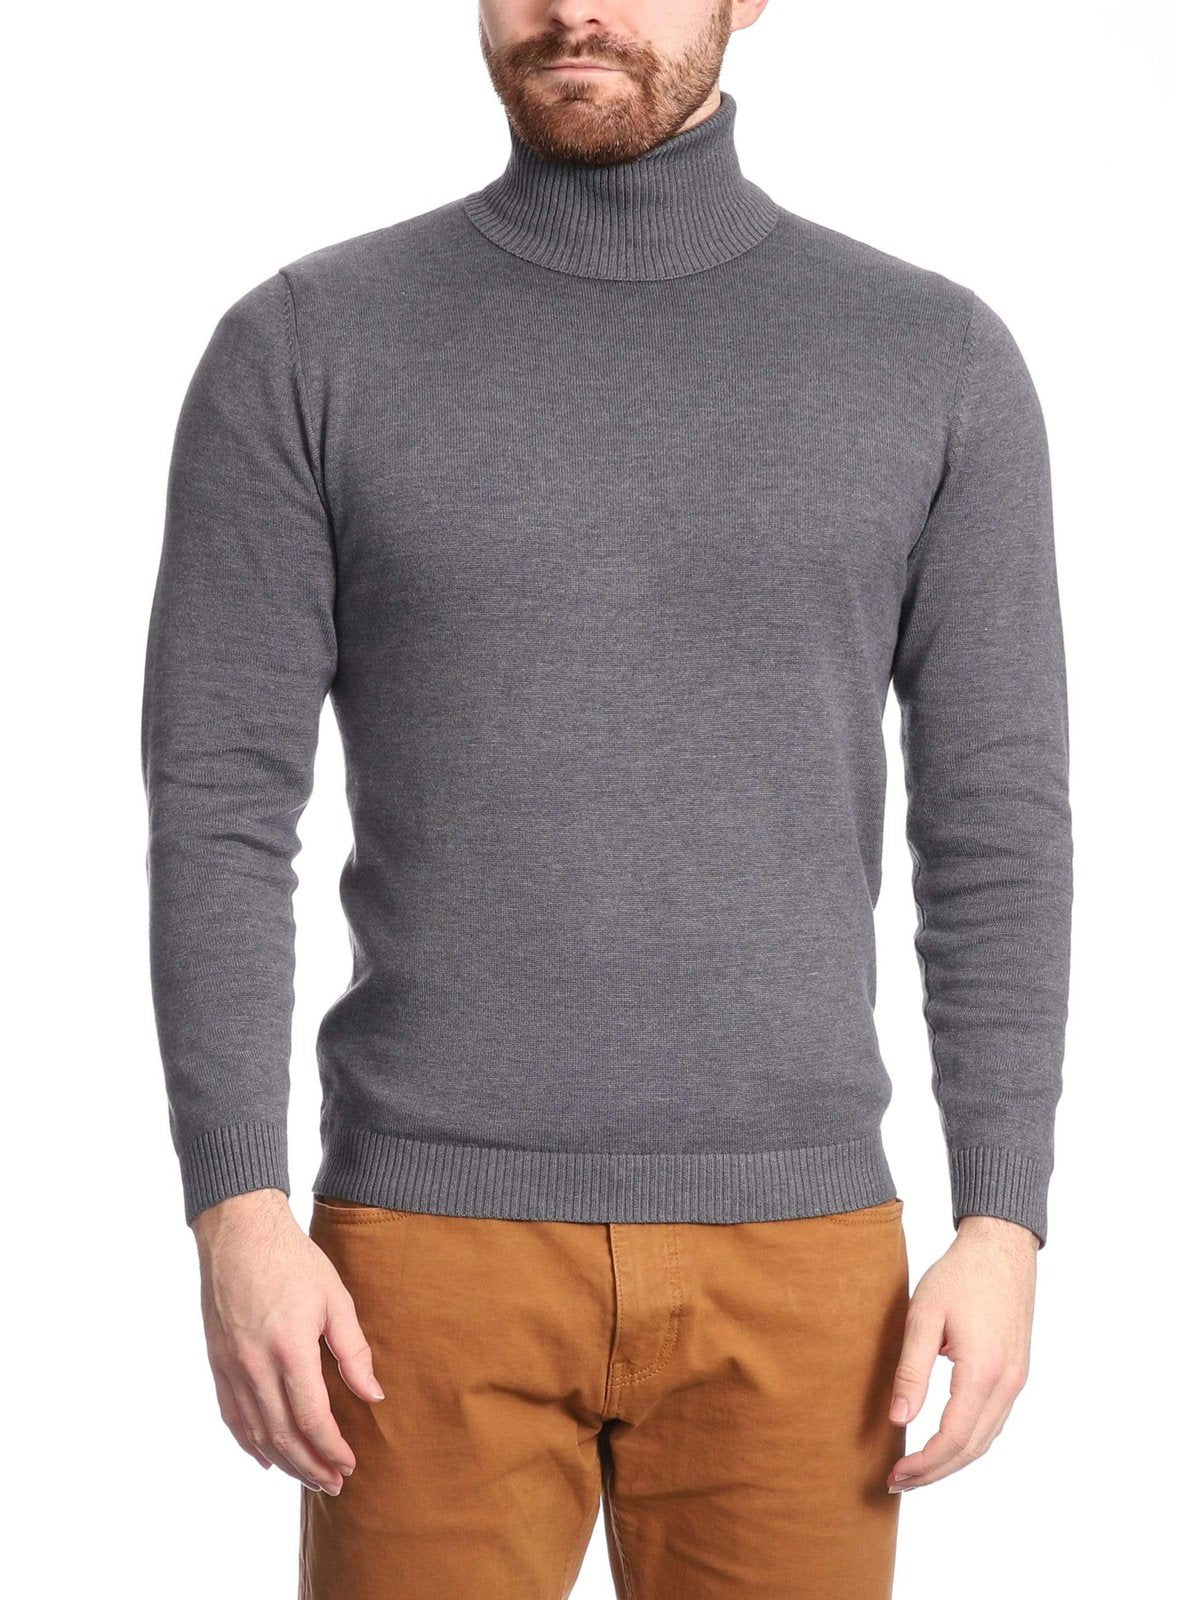 Arthur Black SWEATERS Arthur Black Men&#39;s Solid Light Gray Pullover Cotton Blend Turtleneck Sweater Shirt